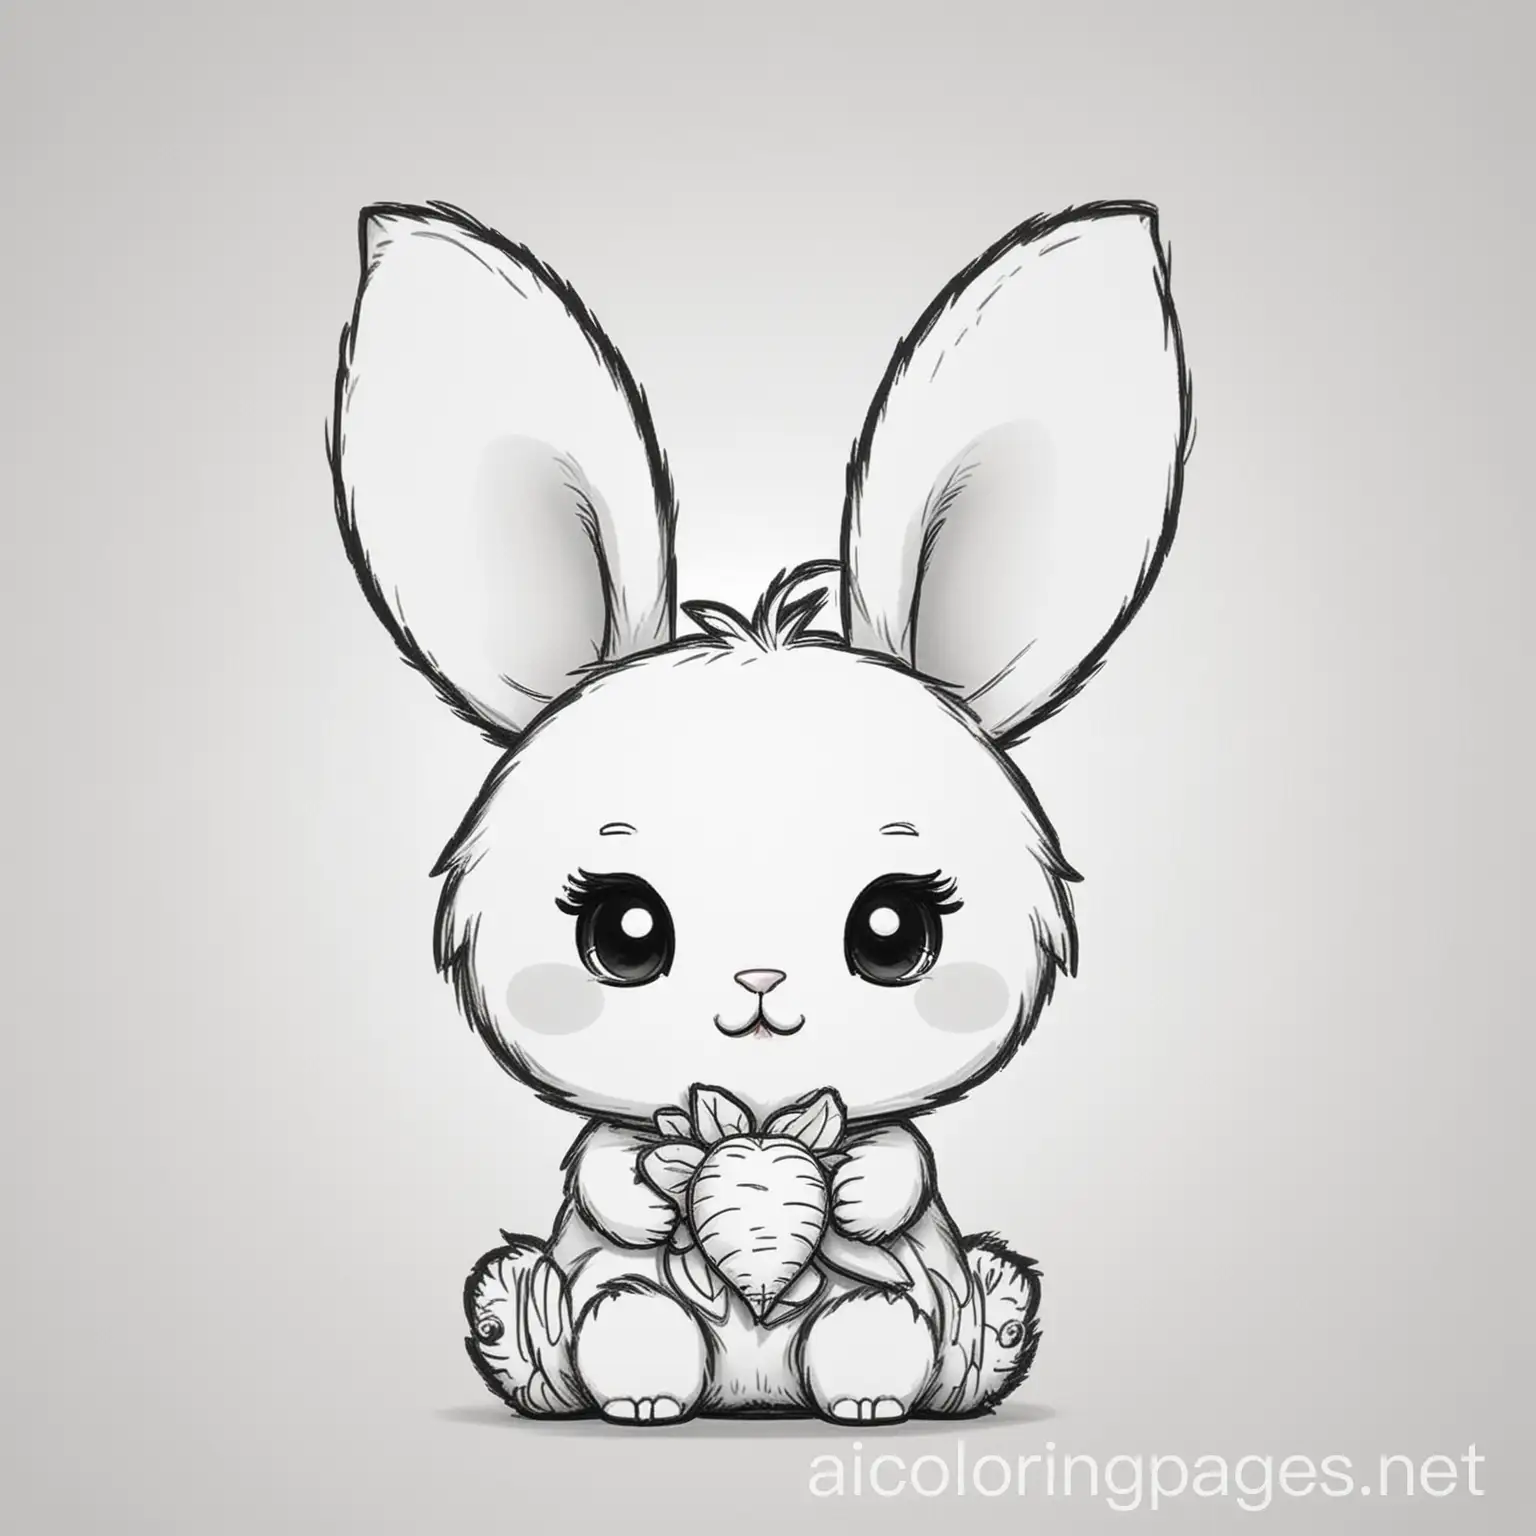 Adorable-Kawaii-Bunny-Holding-Carrot-Coloring-Page